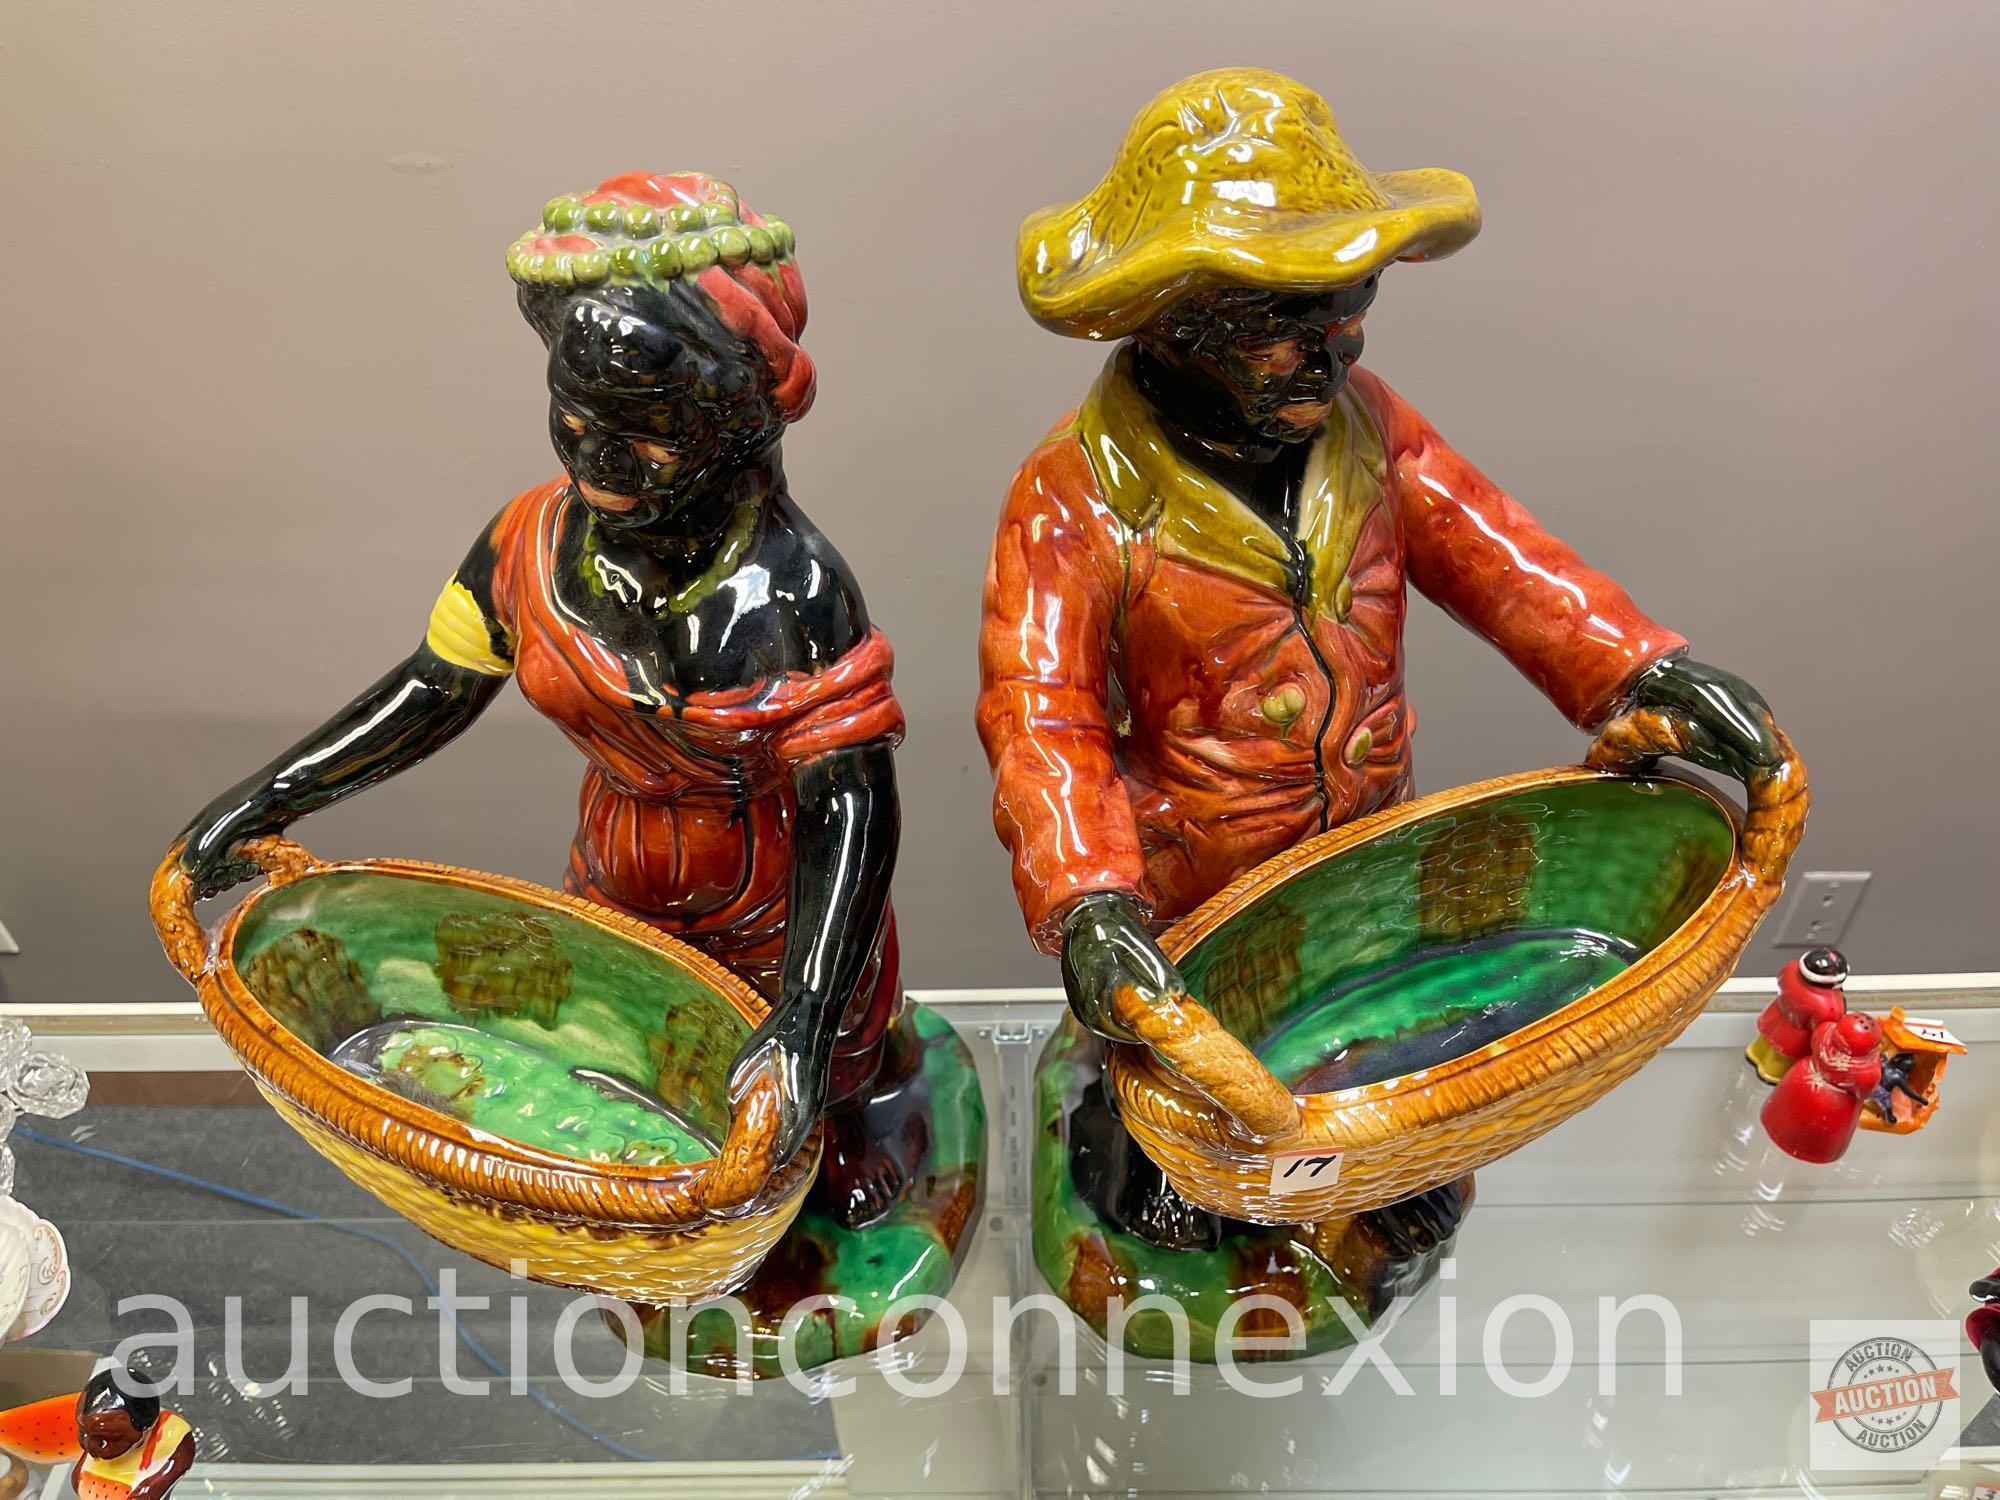 Black Americana - 2x's-the-money Large Majolica Harvest Figurines, 22"h